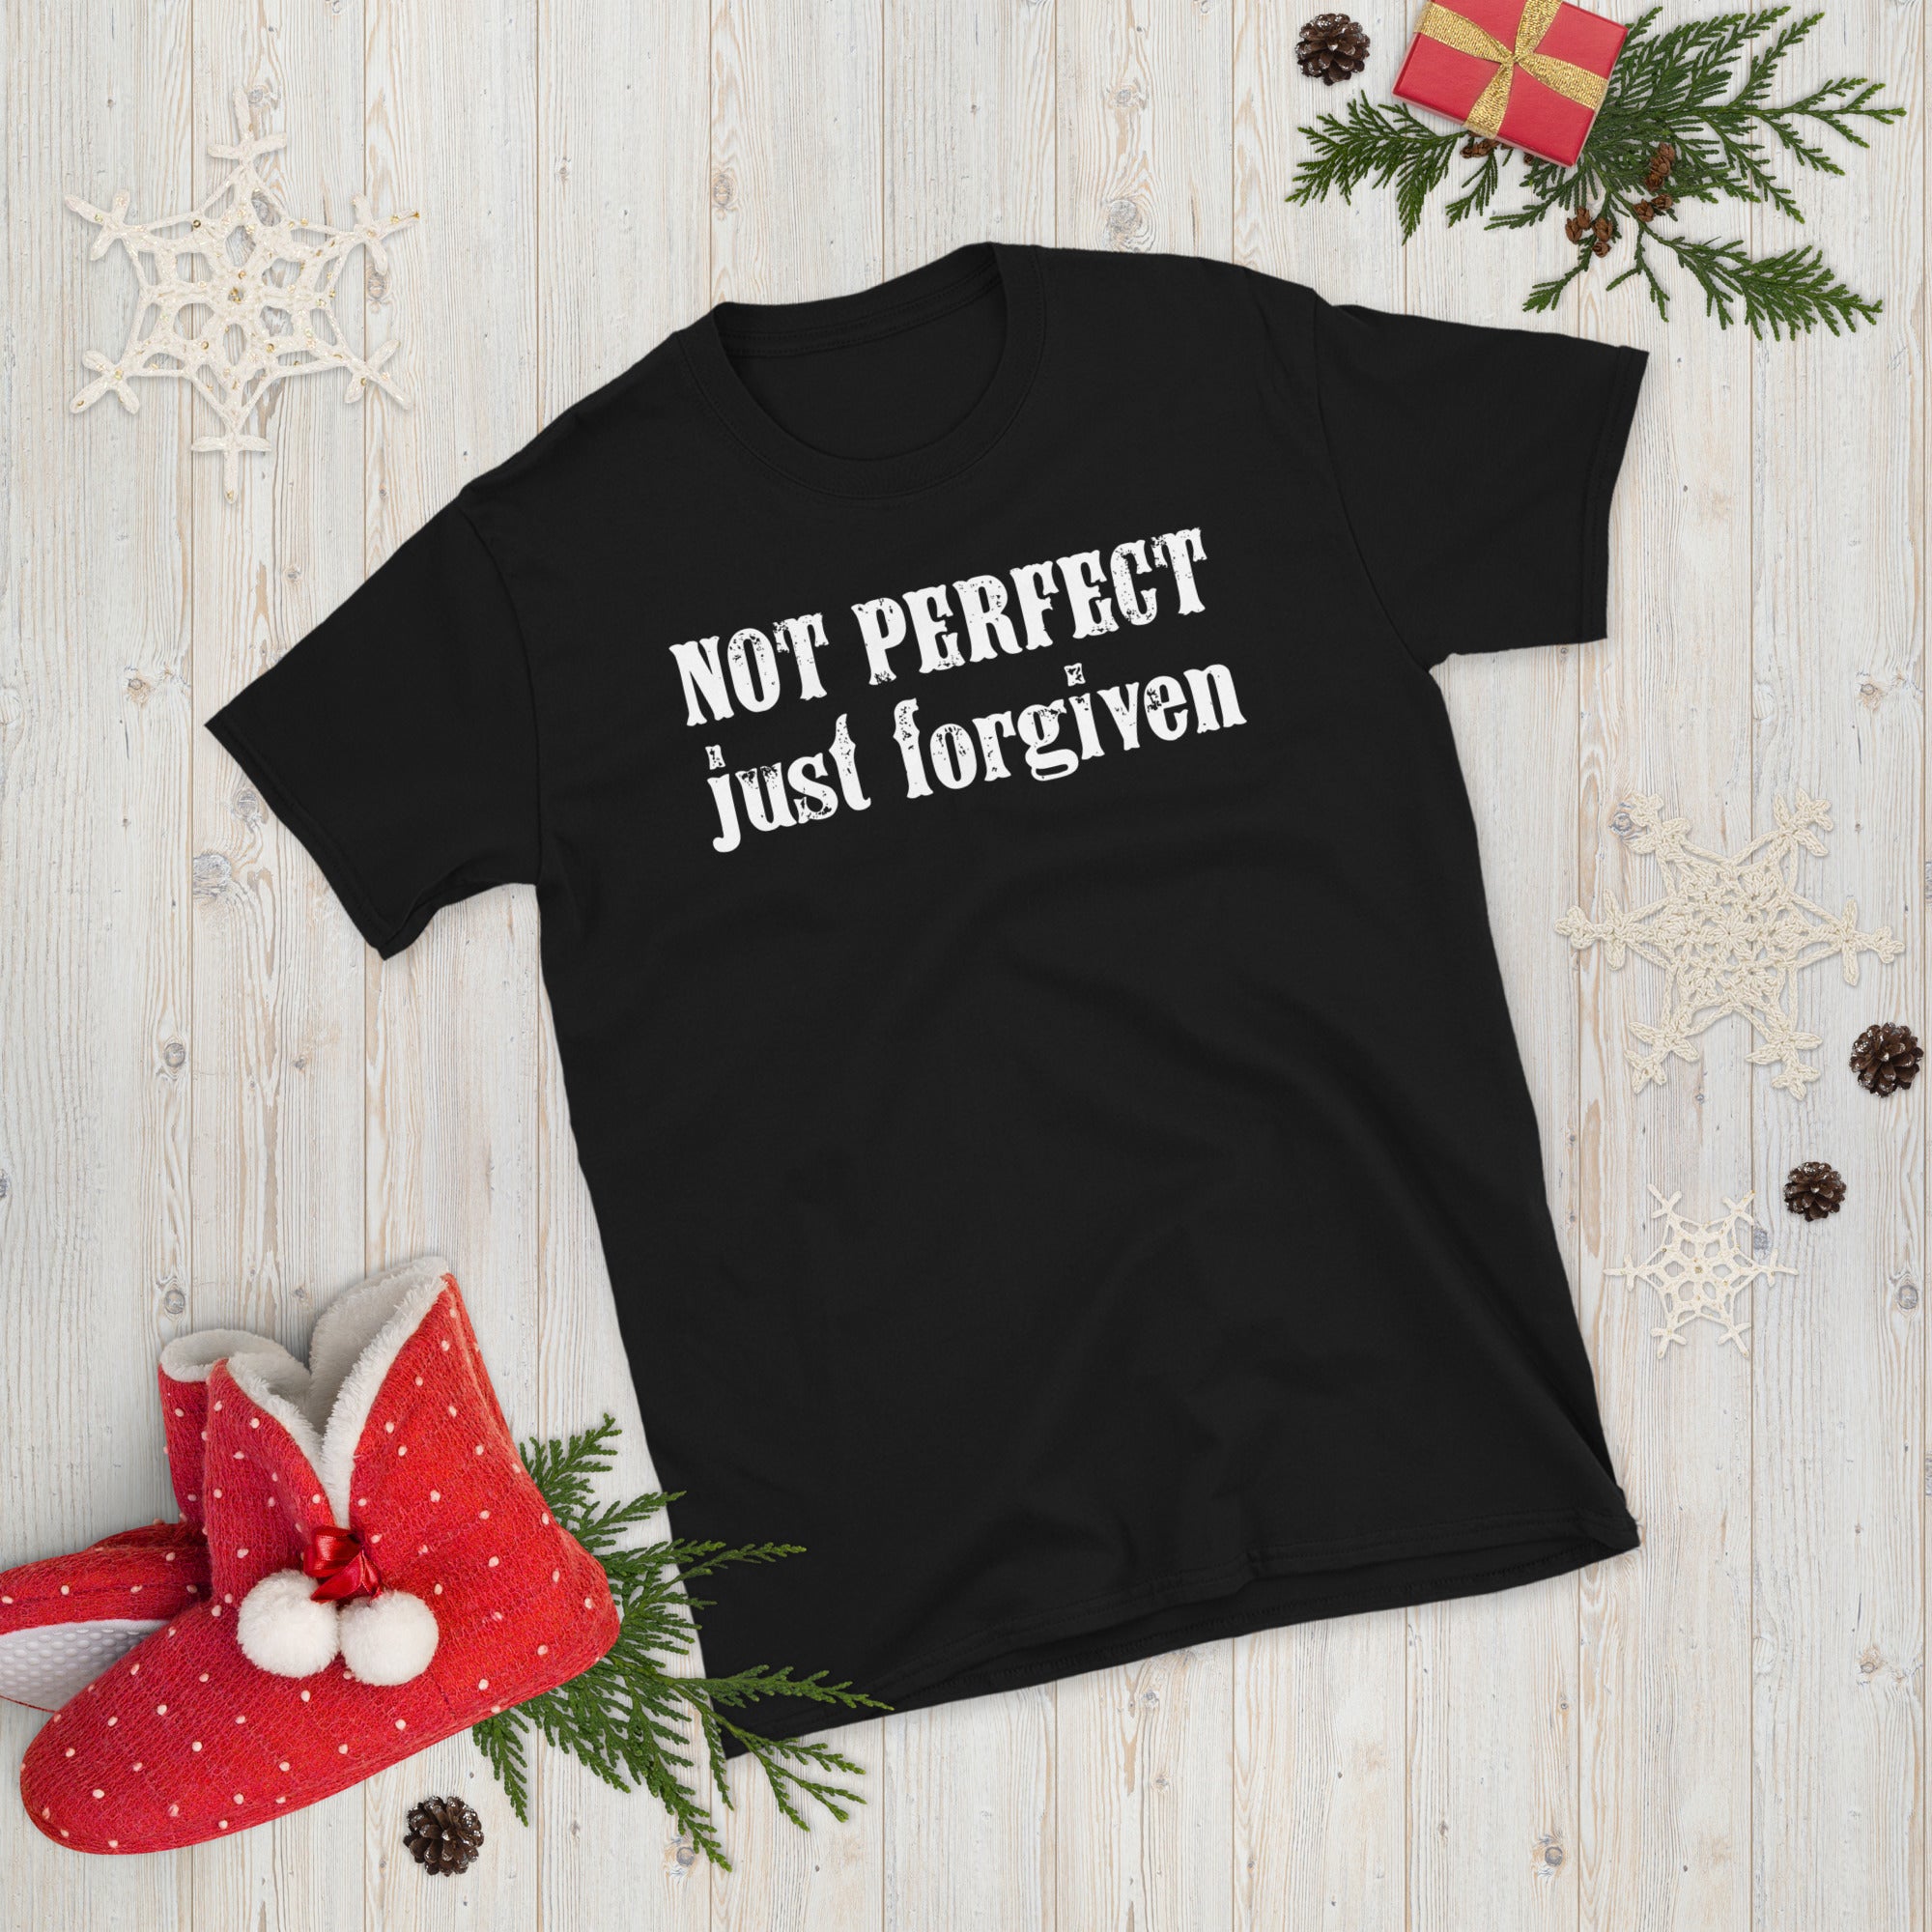 Not Perfect Just Forgiven Shirt, Christian Shirt, Religious Gifts For Men Women, Bible Verse Tshirt, Religious Gifts, Holy Bible T Shirt - Madeinsea©